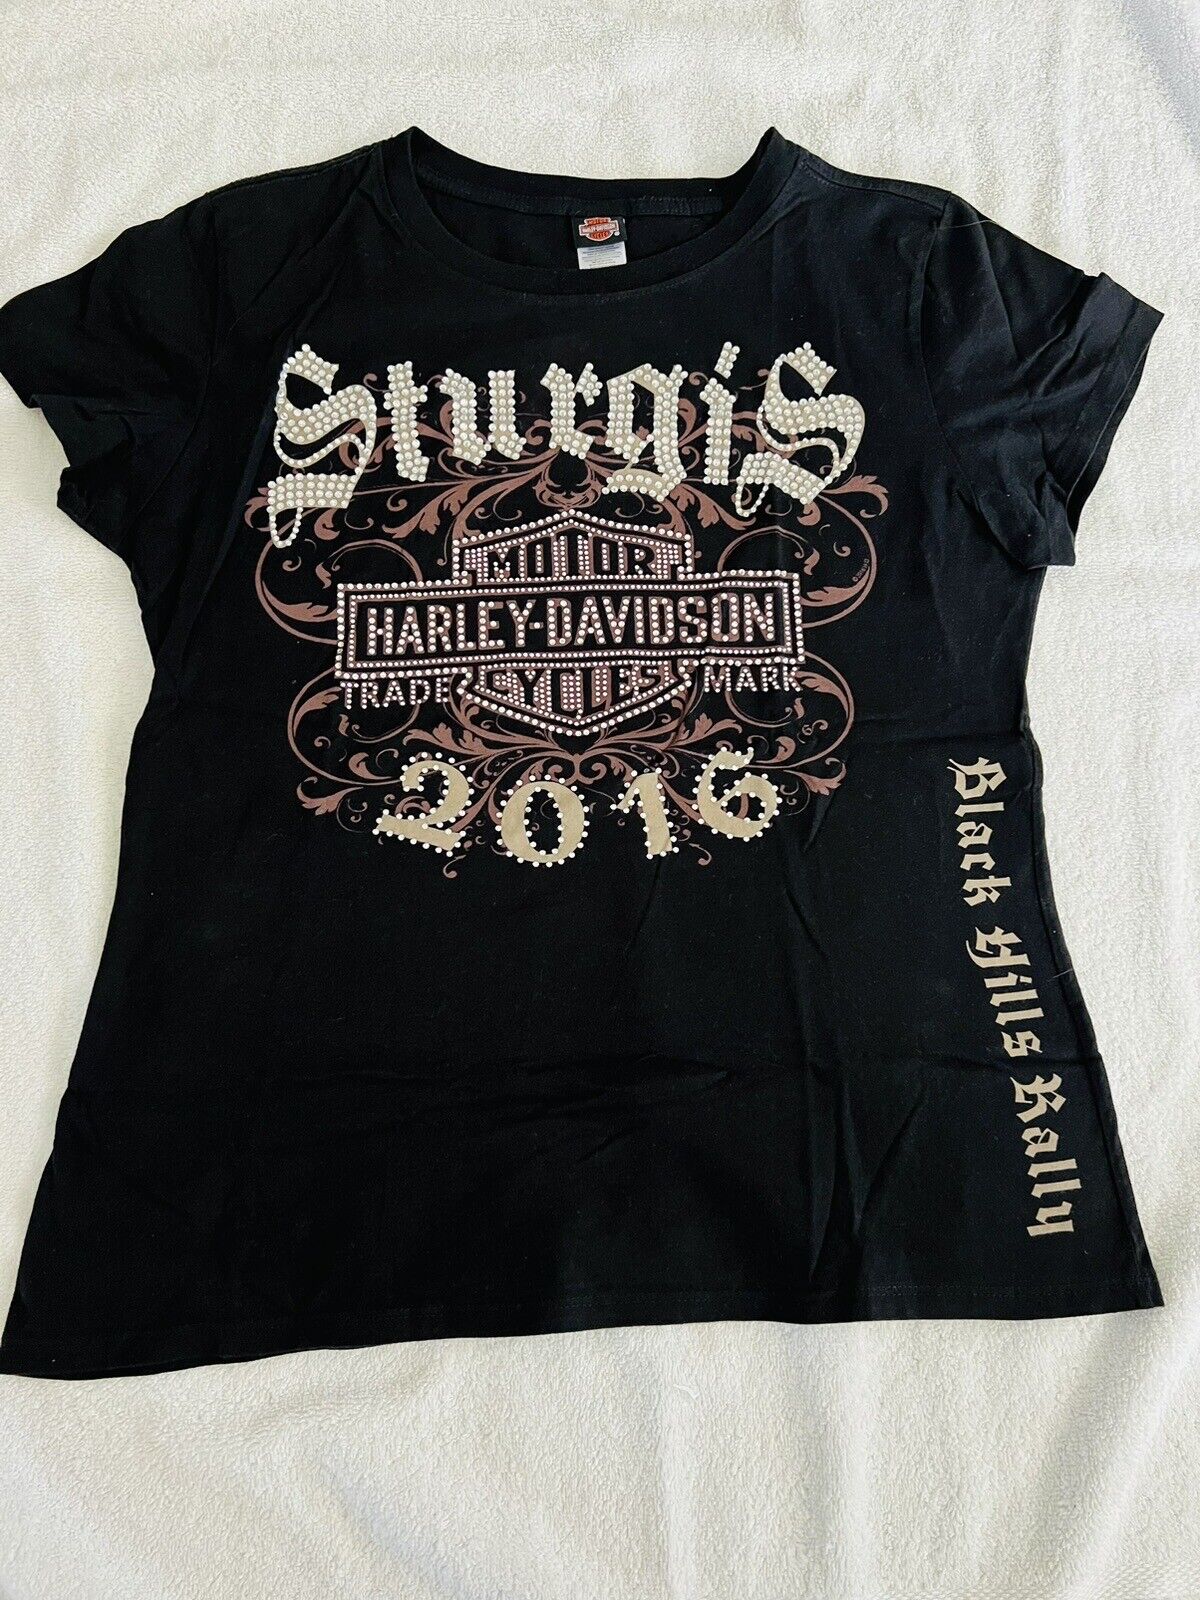 Harley Davidson 2016 Sturgis Black Hills Rally Shirt Womens Size Large